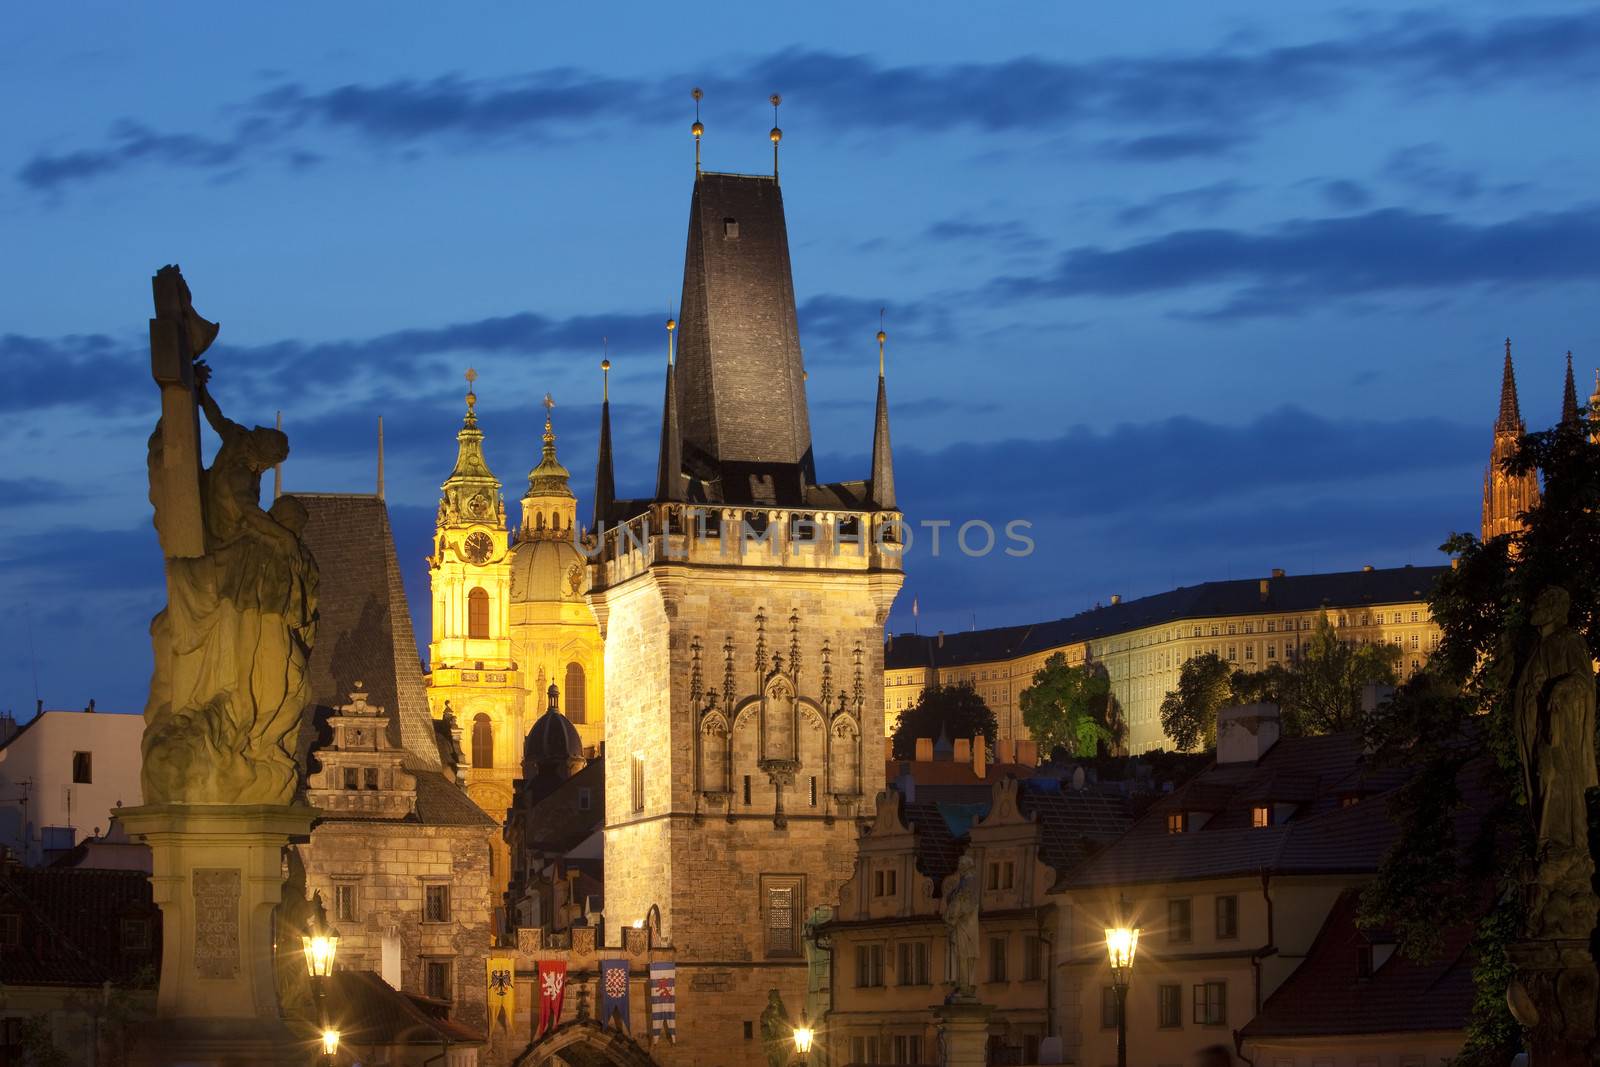 czech republic prague - charles bridge tower and st. nicolas church at dusk